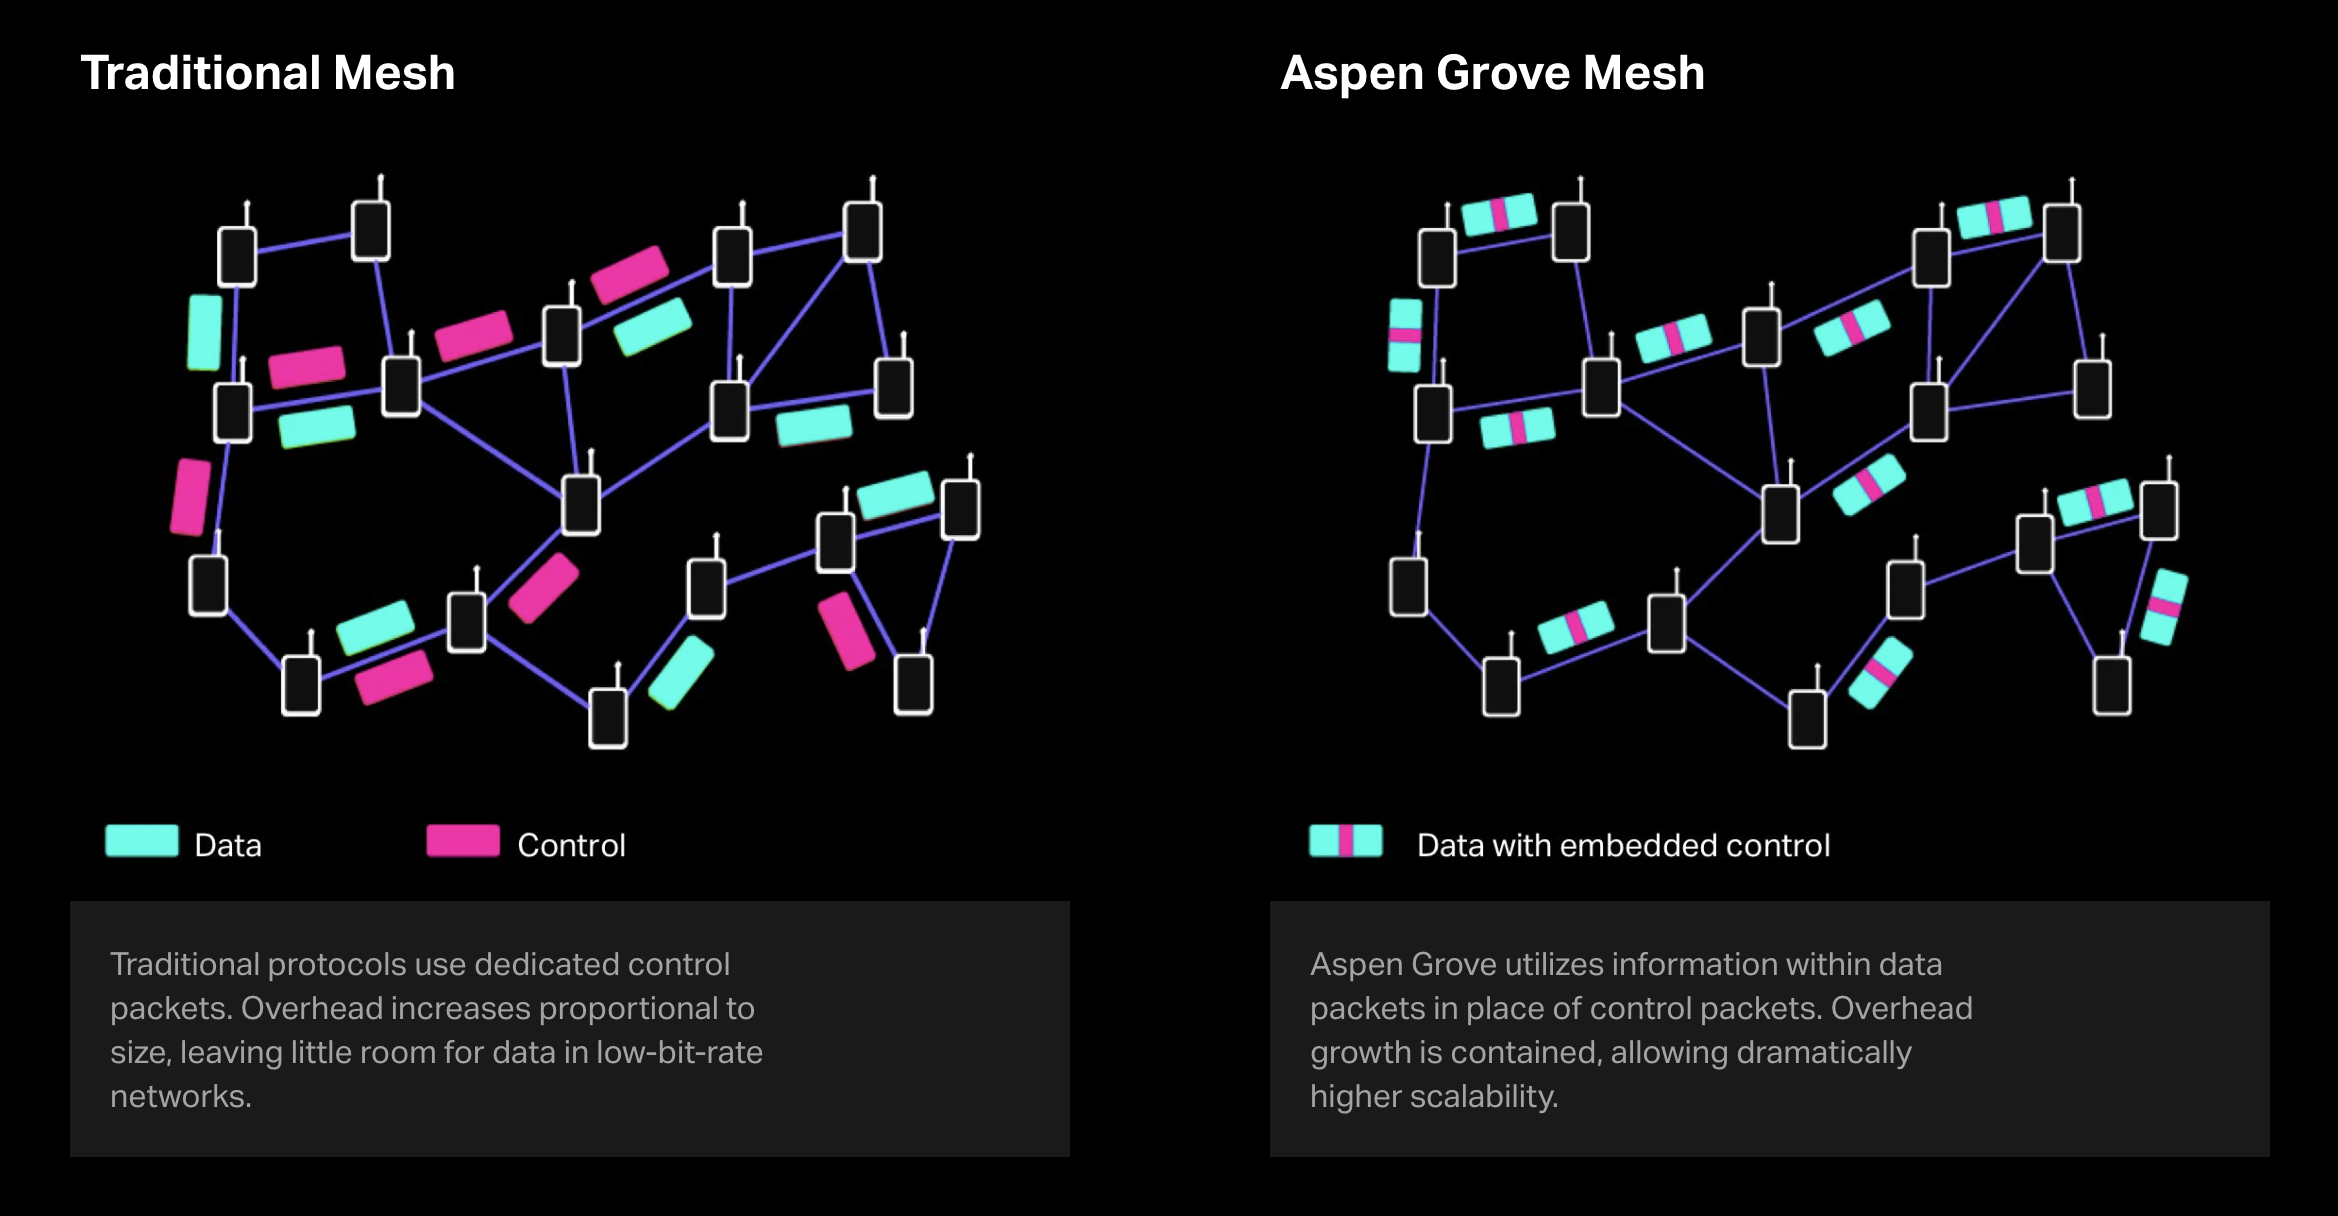 Aspen Grove Mobile Mesh Networking Protocol vs. Traditional Mesh Networks